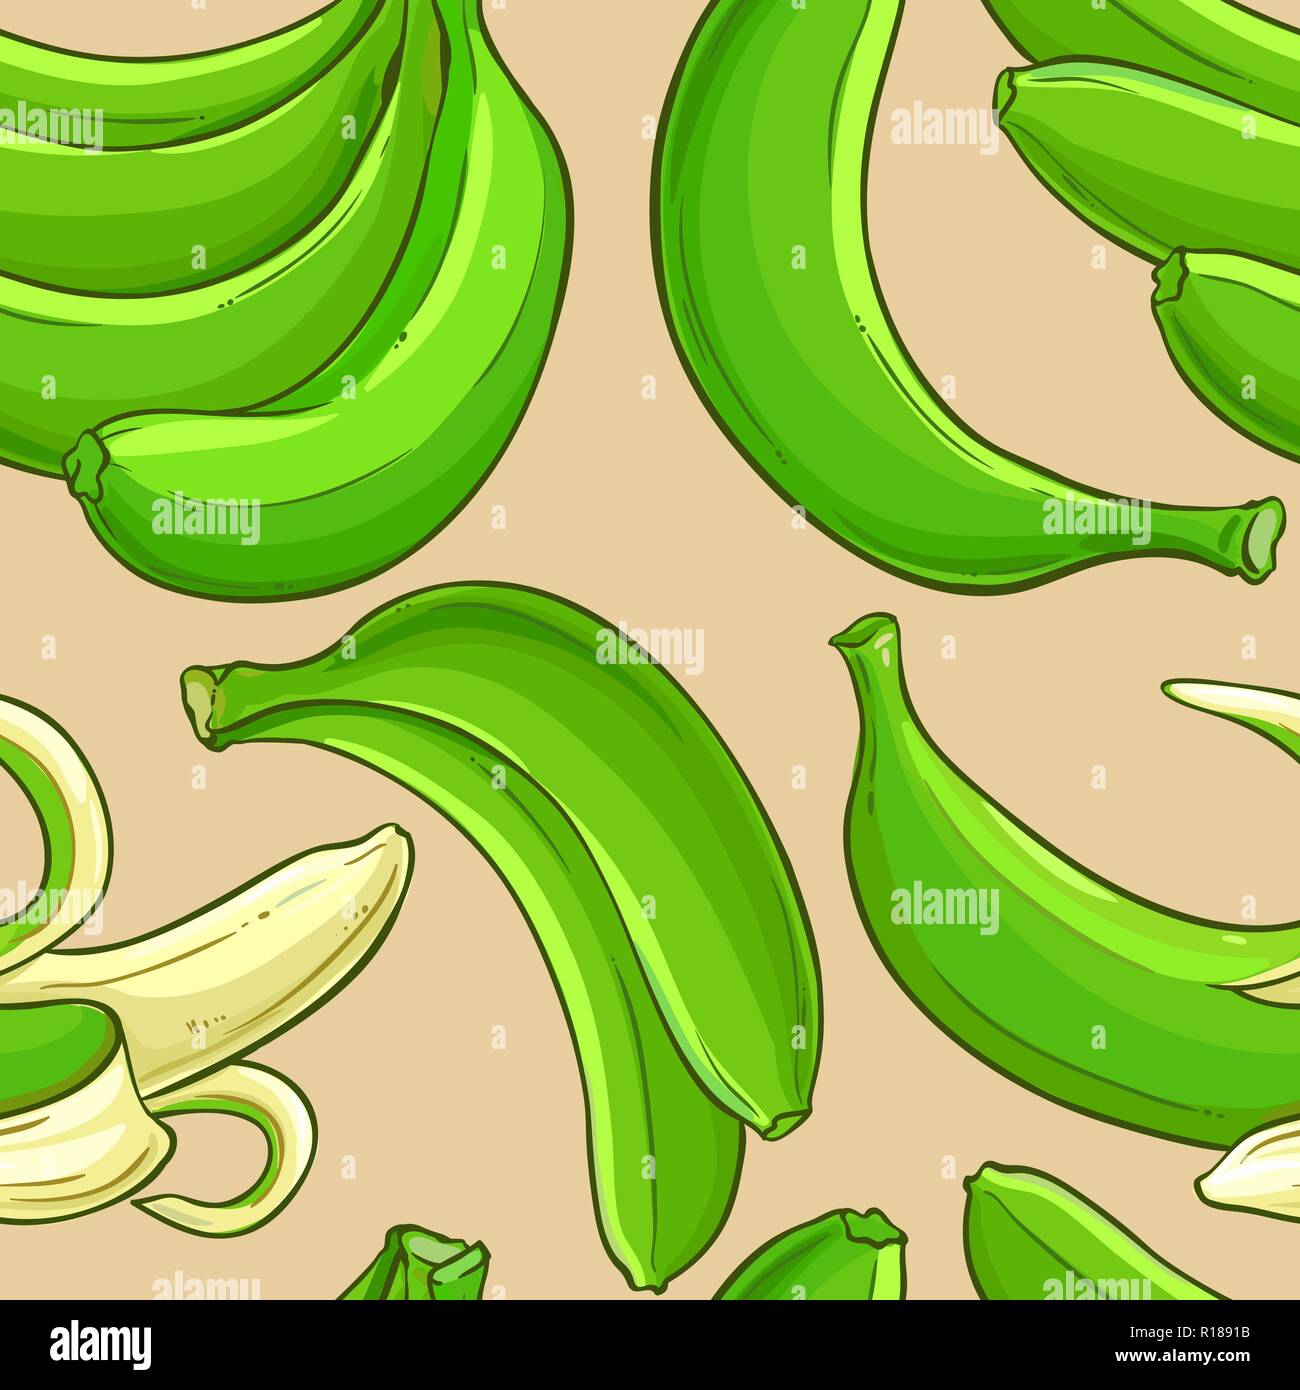 Grüner Banane Obst vektor Muster auf farbigen Hintergrund Stock Vektor